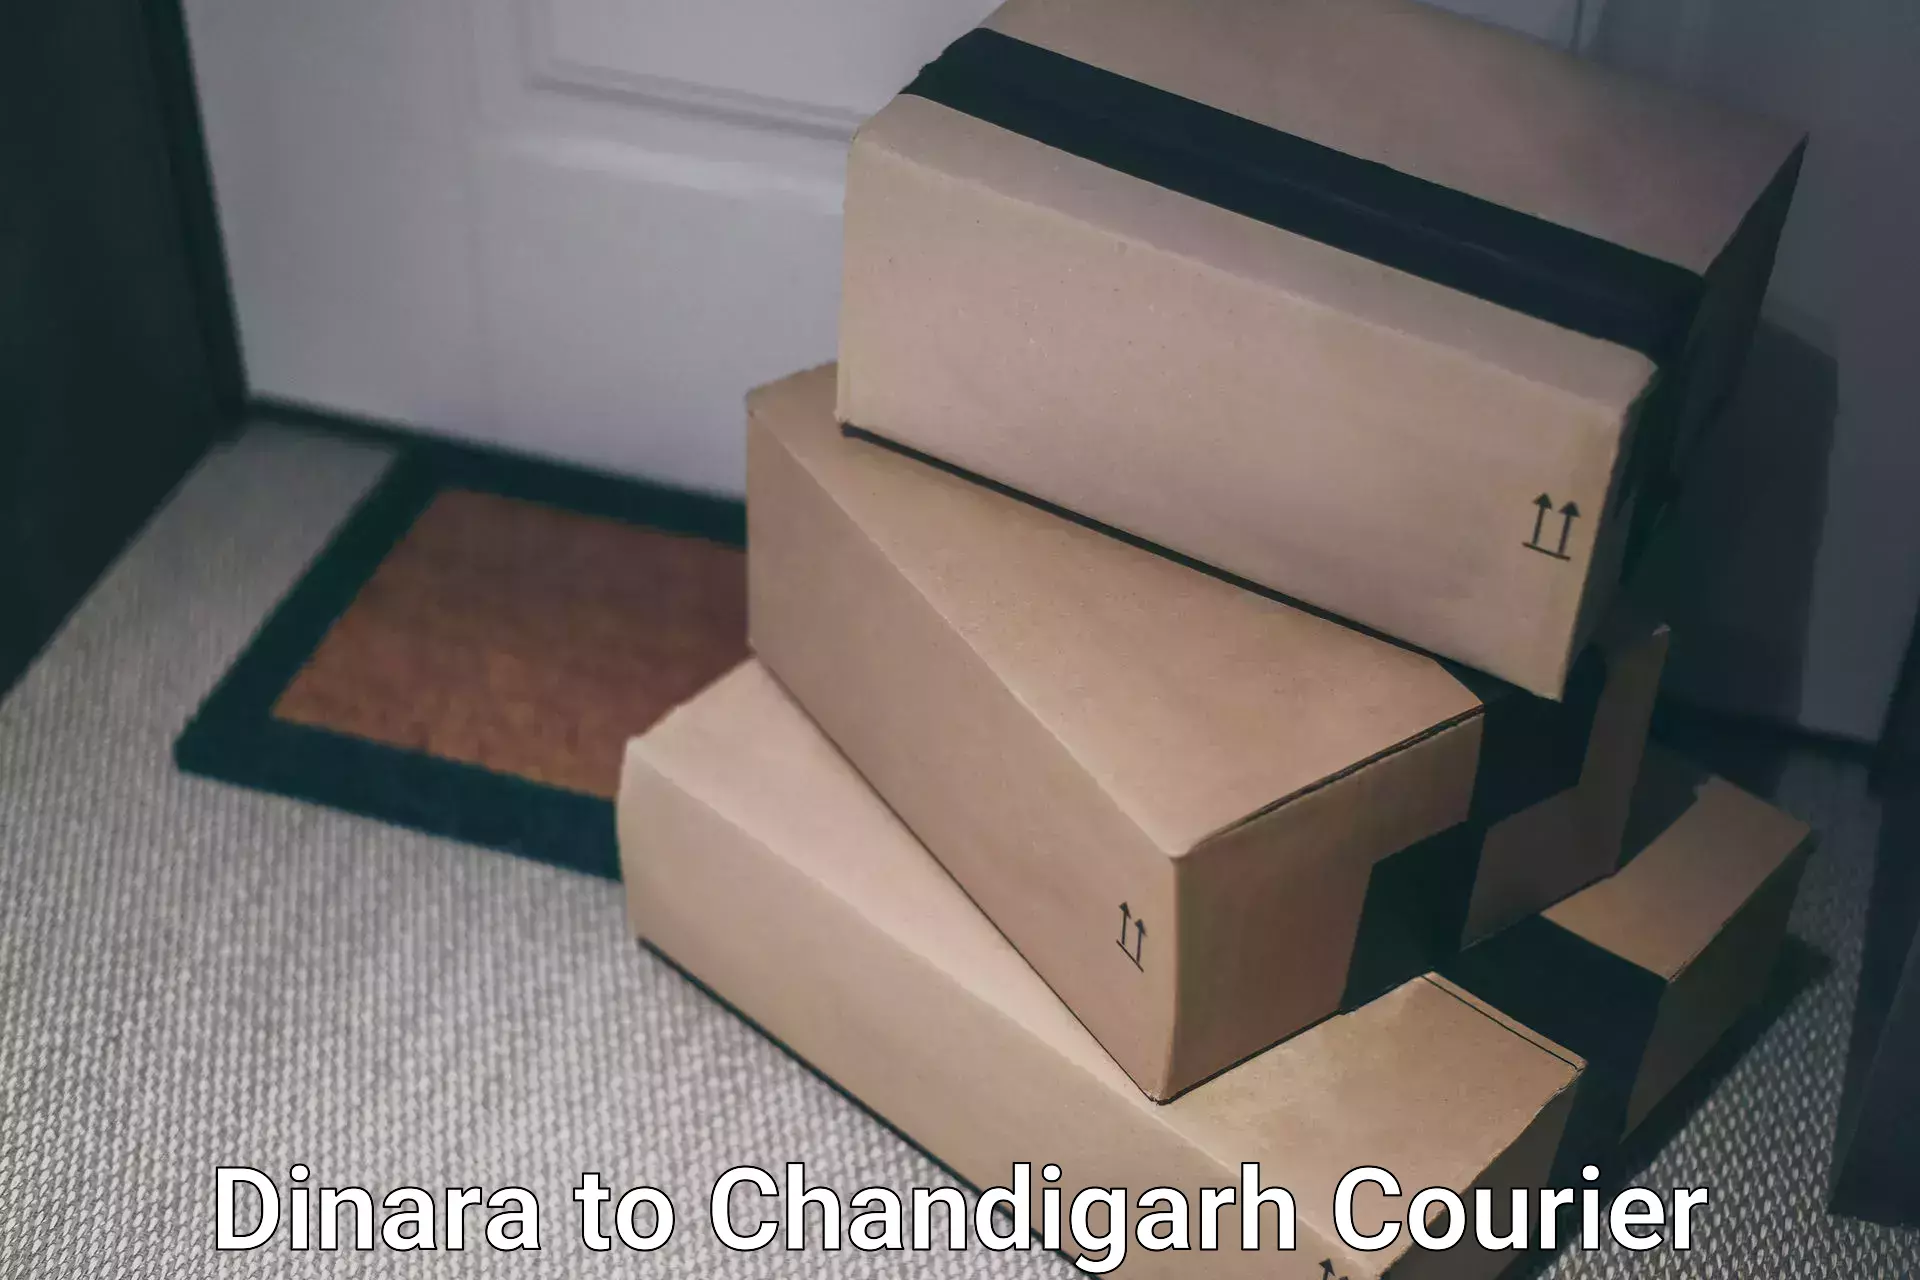 International courier networks Dinara to Chandigarh